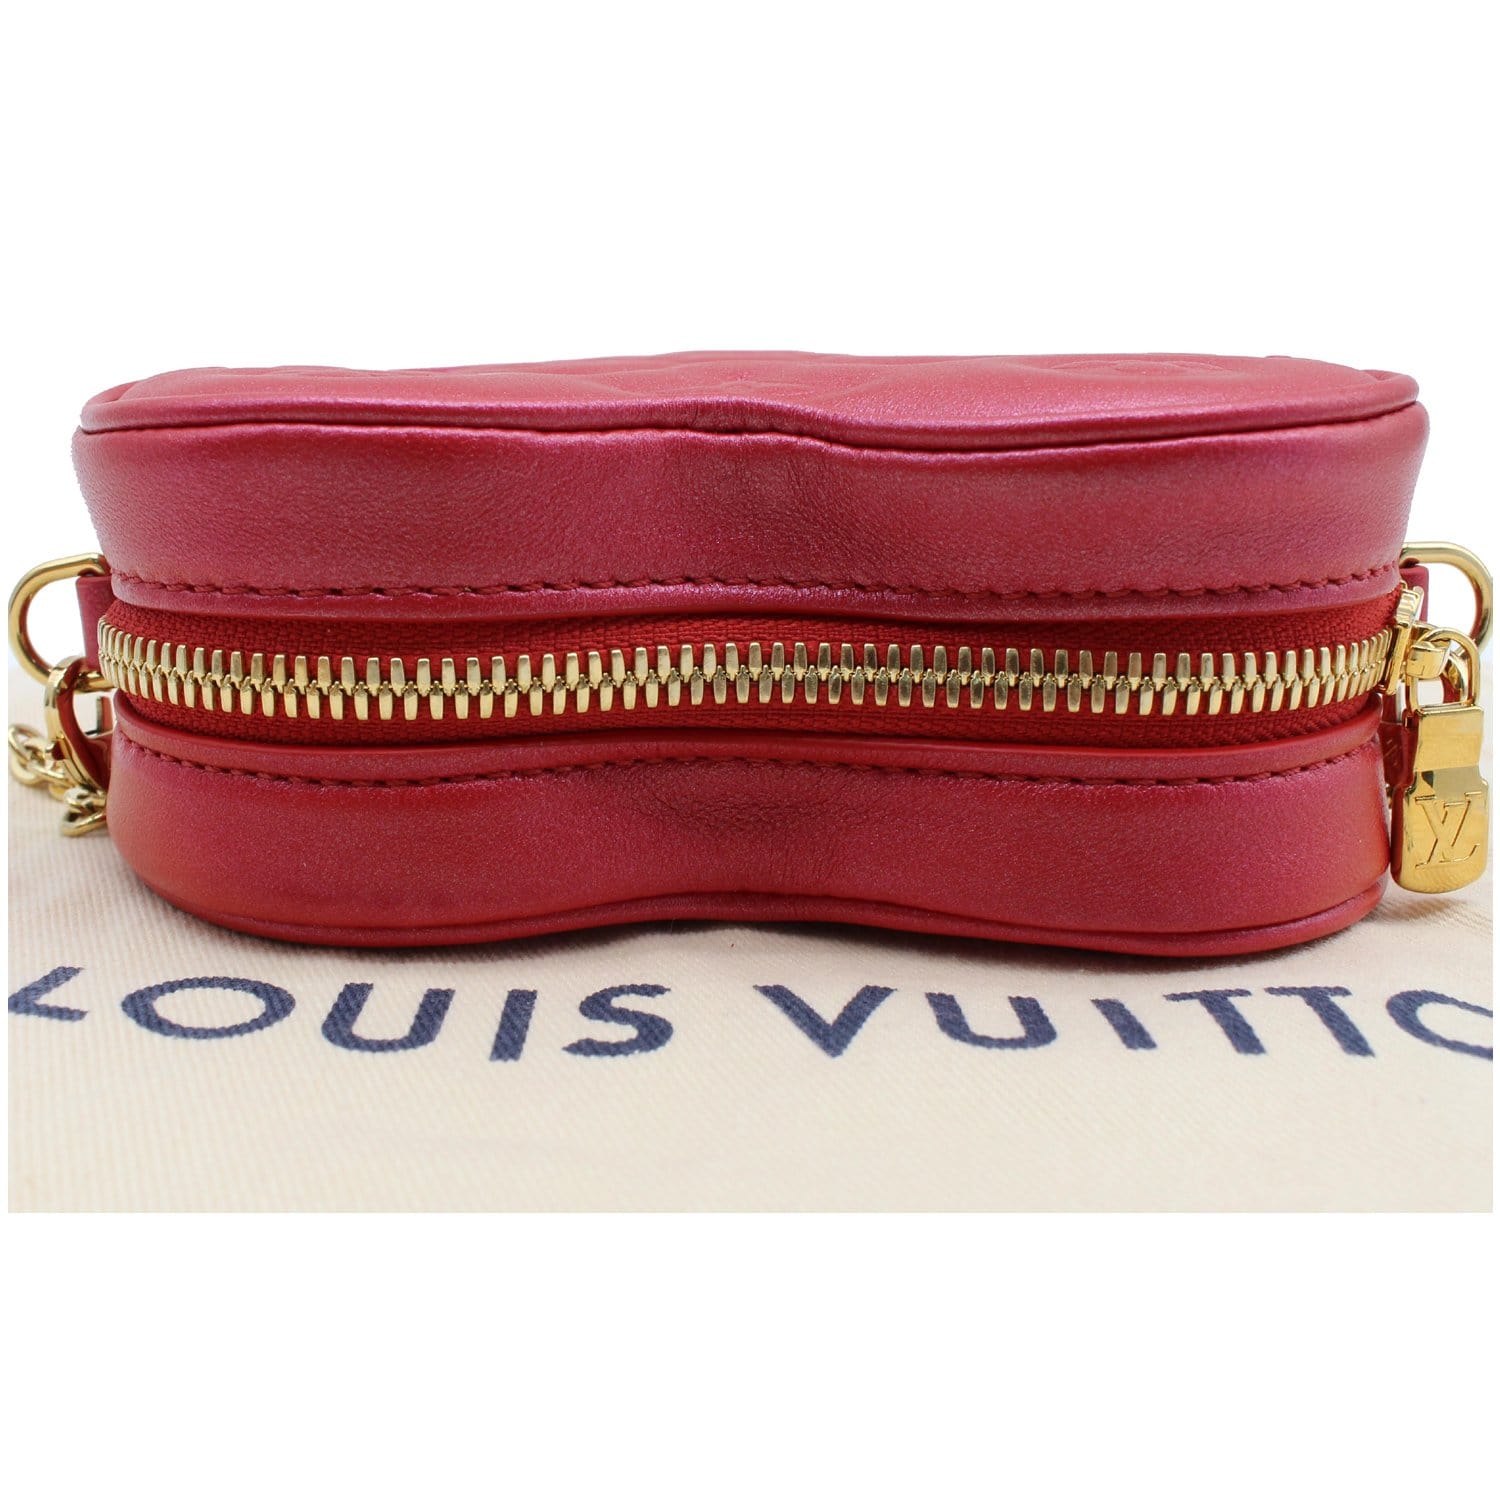 Louis Vuitton Heart on Chain Monogram Embossed Crossbody Bag Red